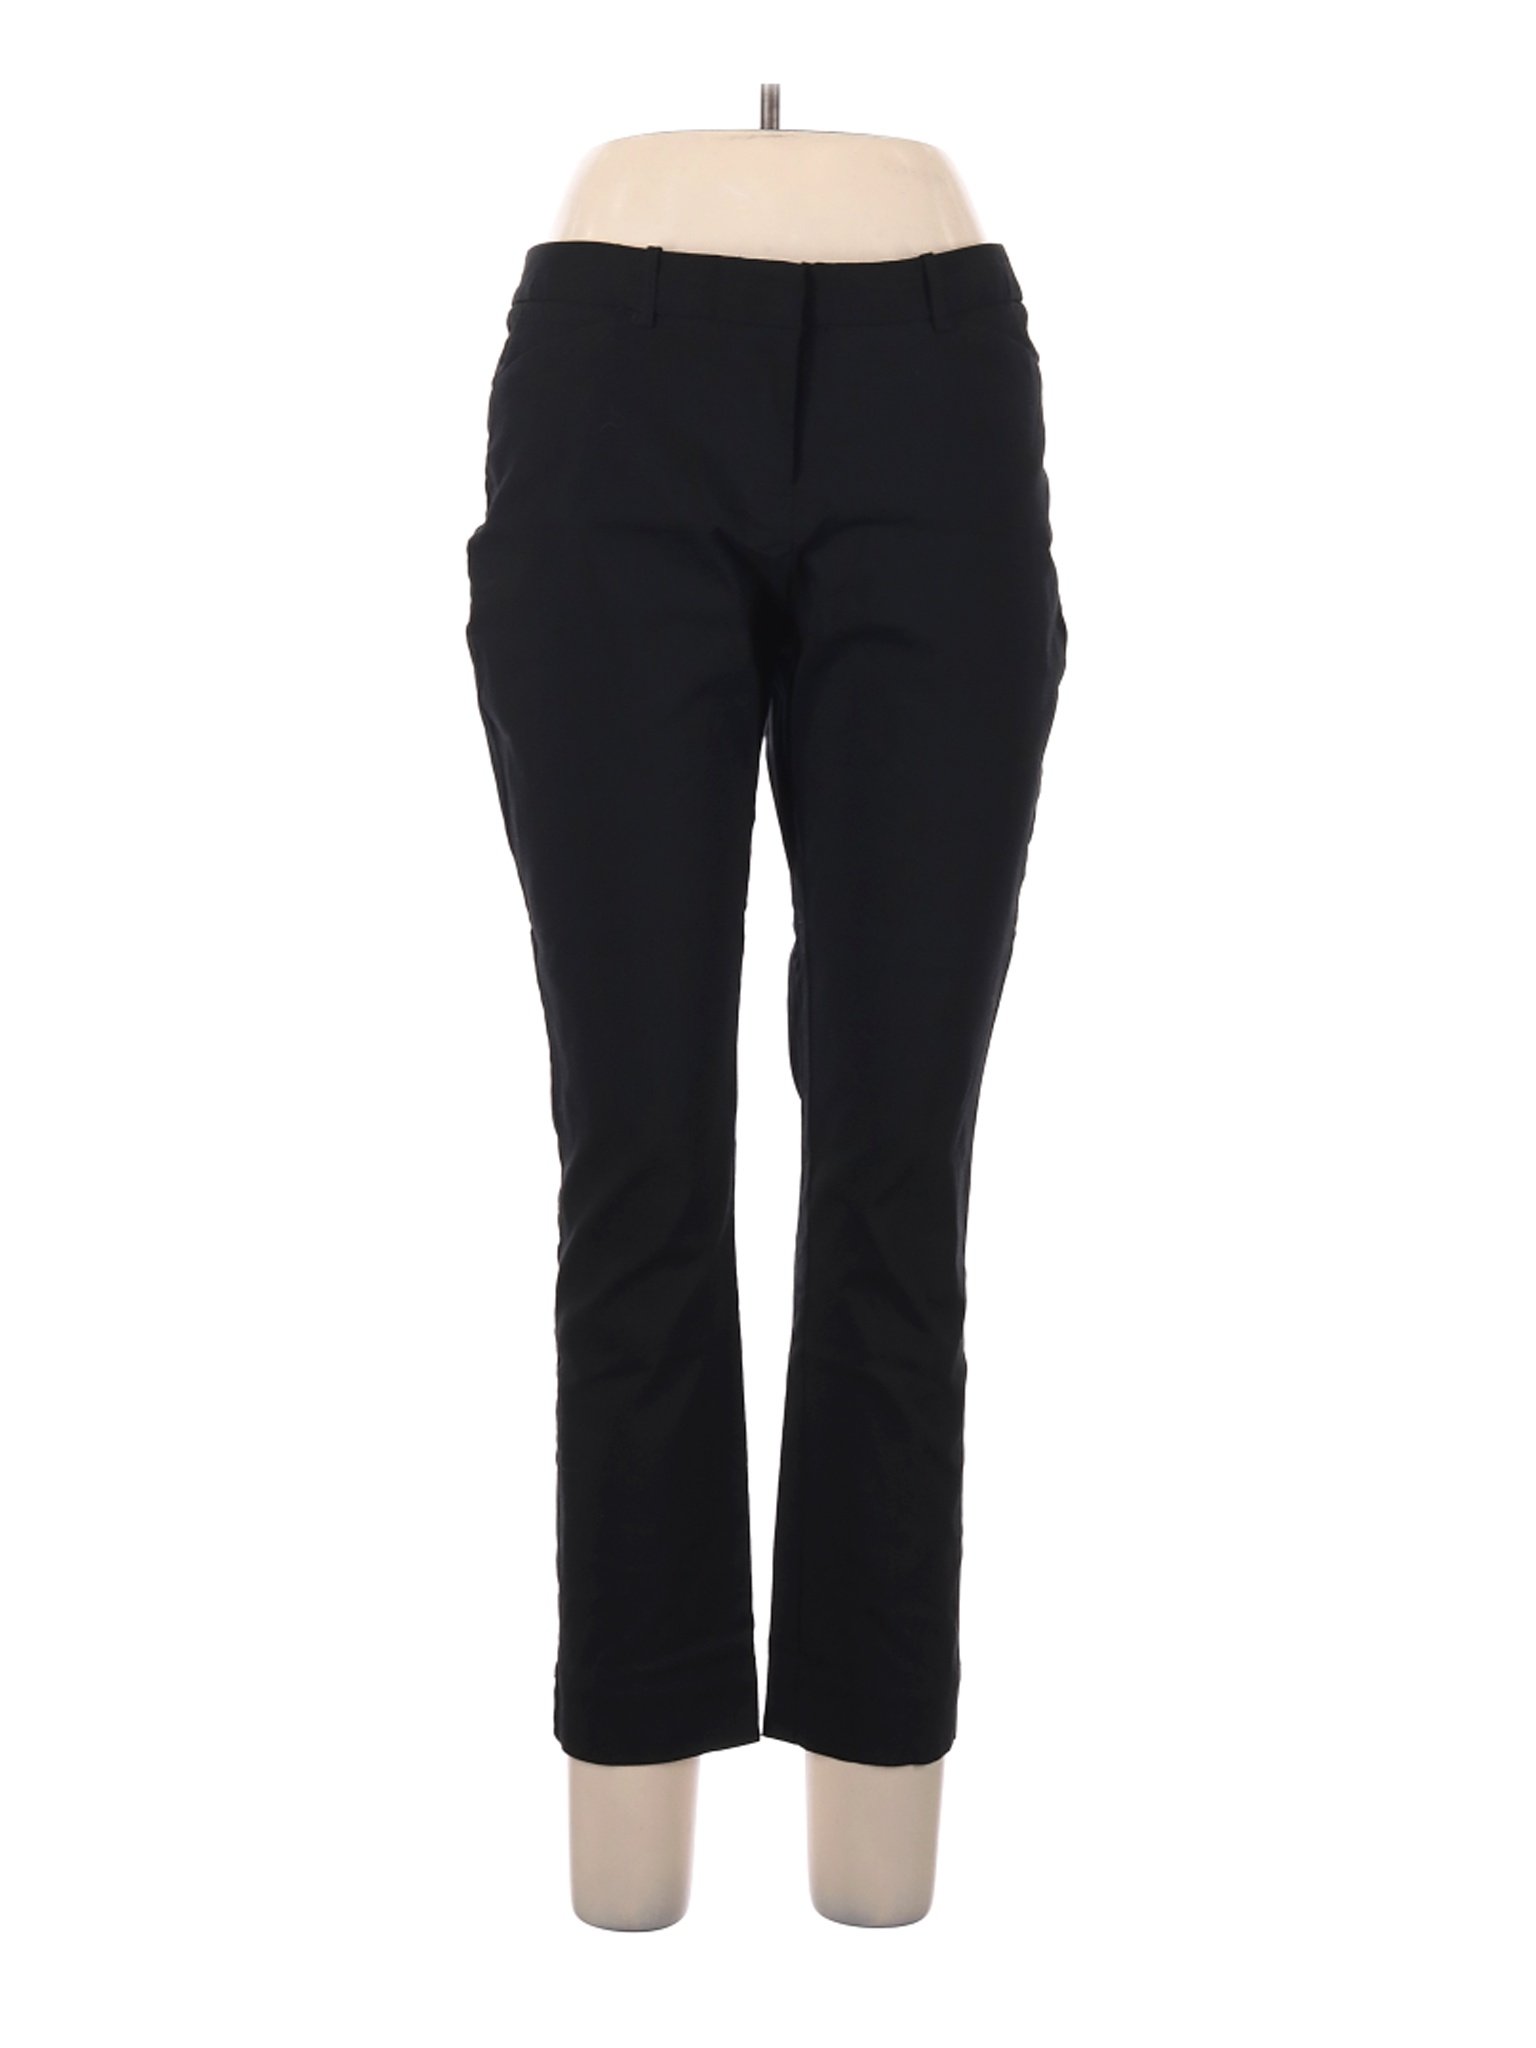 Worthington Women Black Casual Pants 10 | eBay